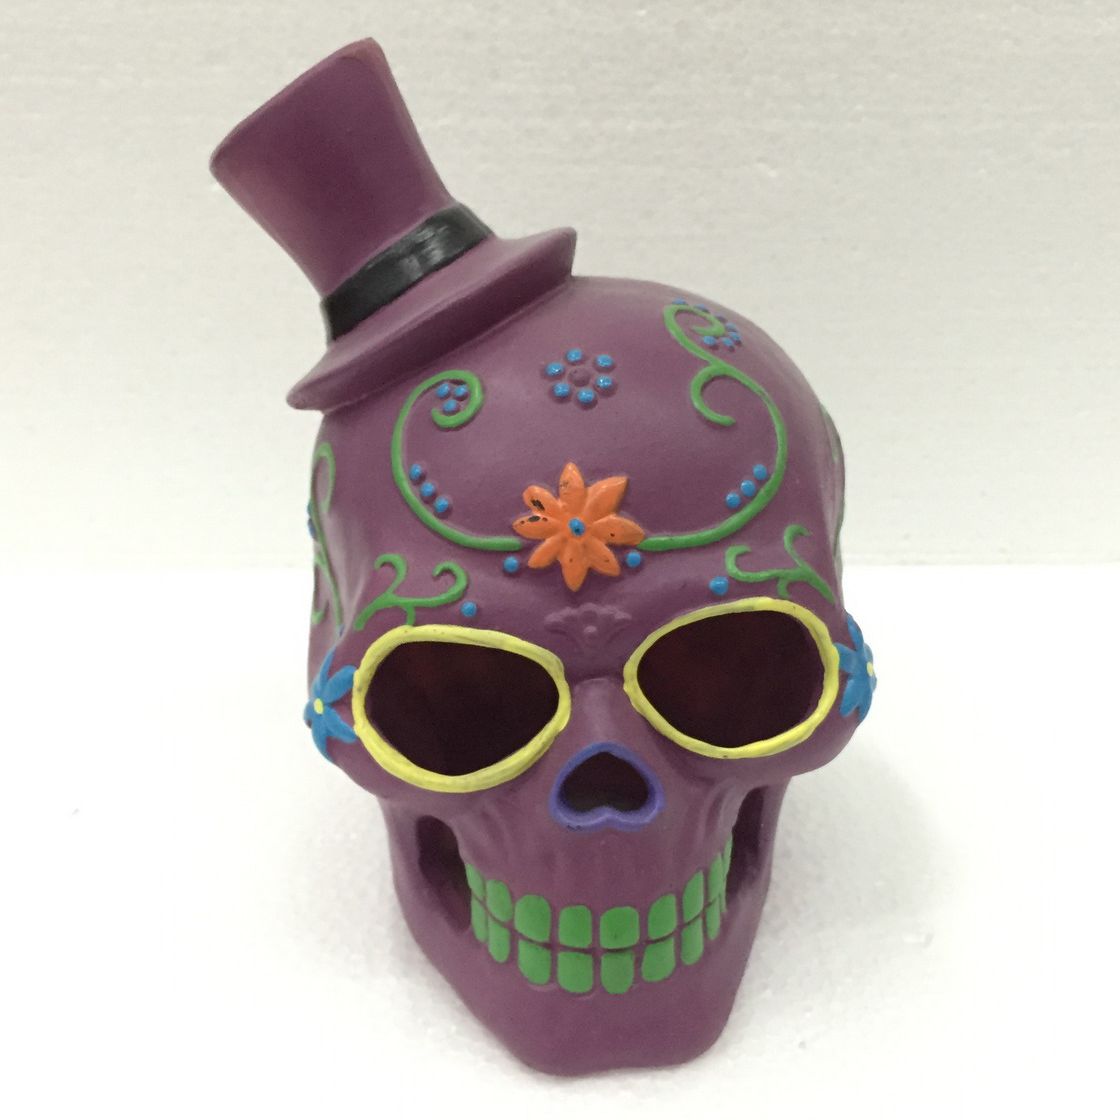 New Arrival Wholesale Halloween Ceramic Skull Couple Head